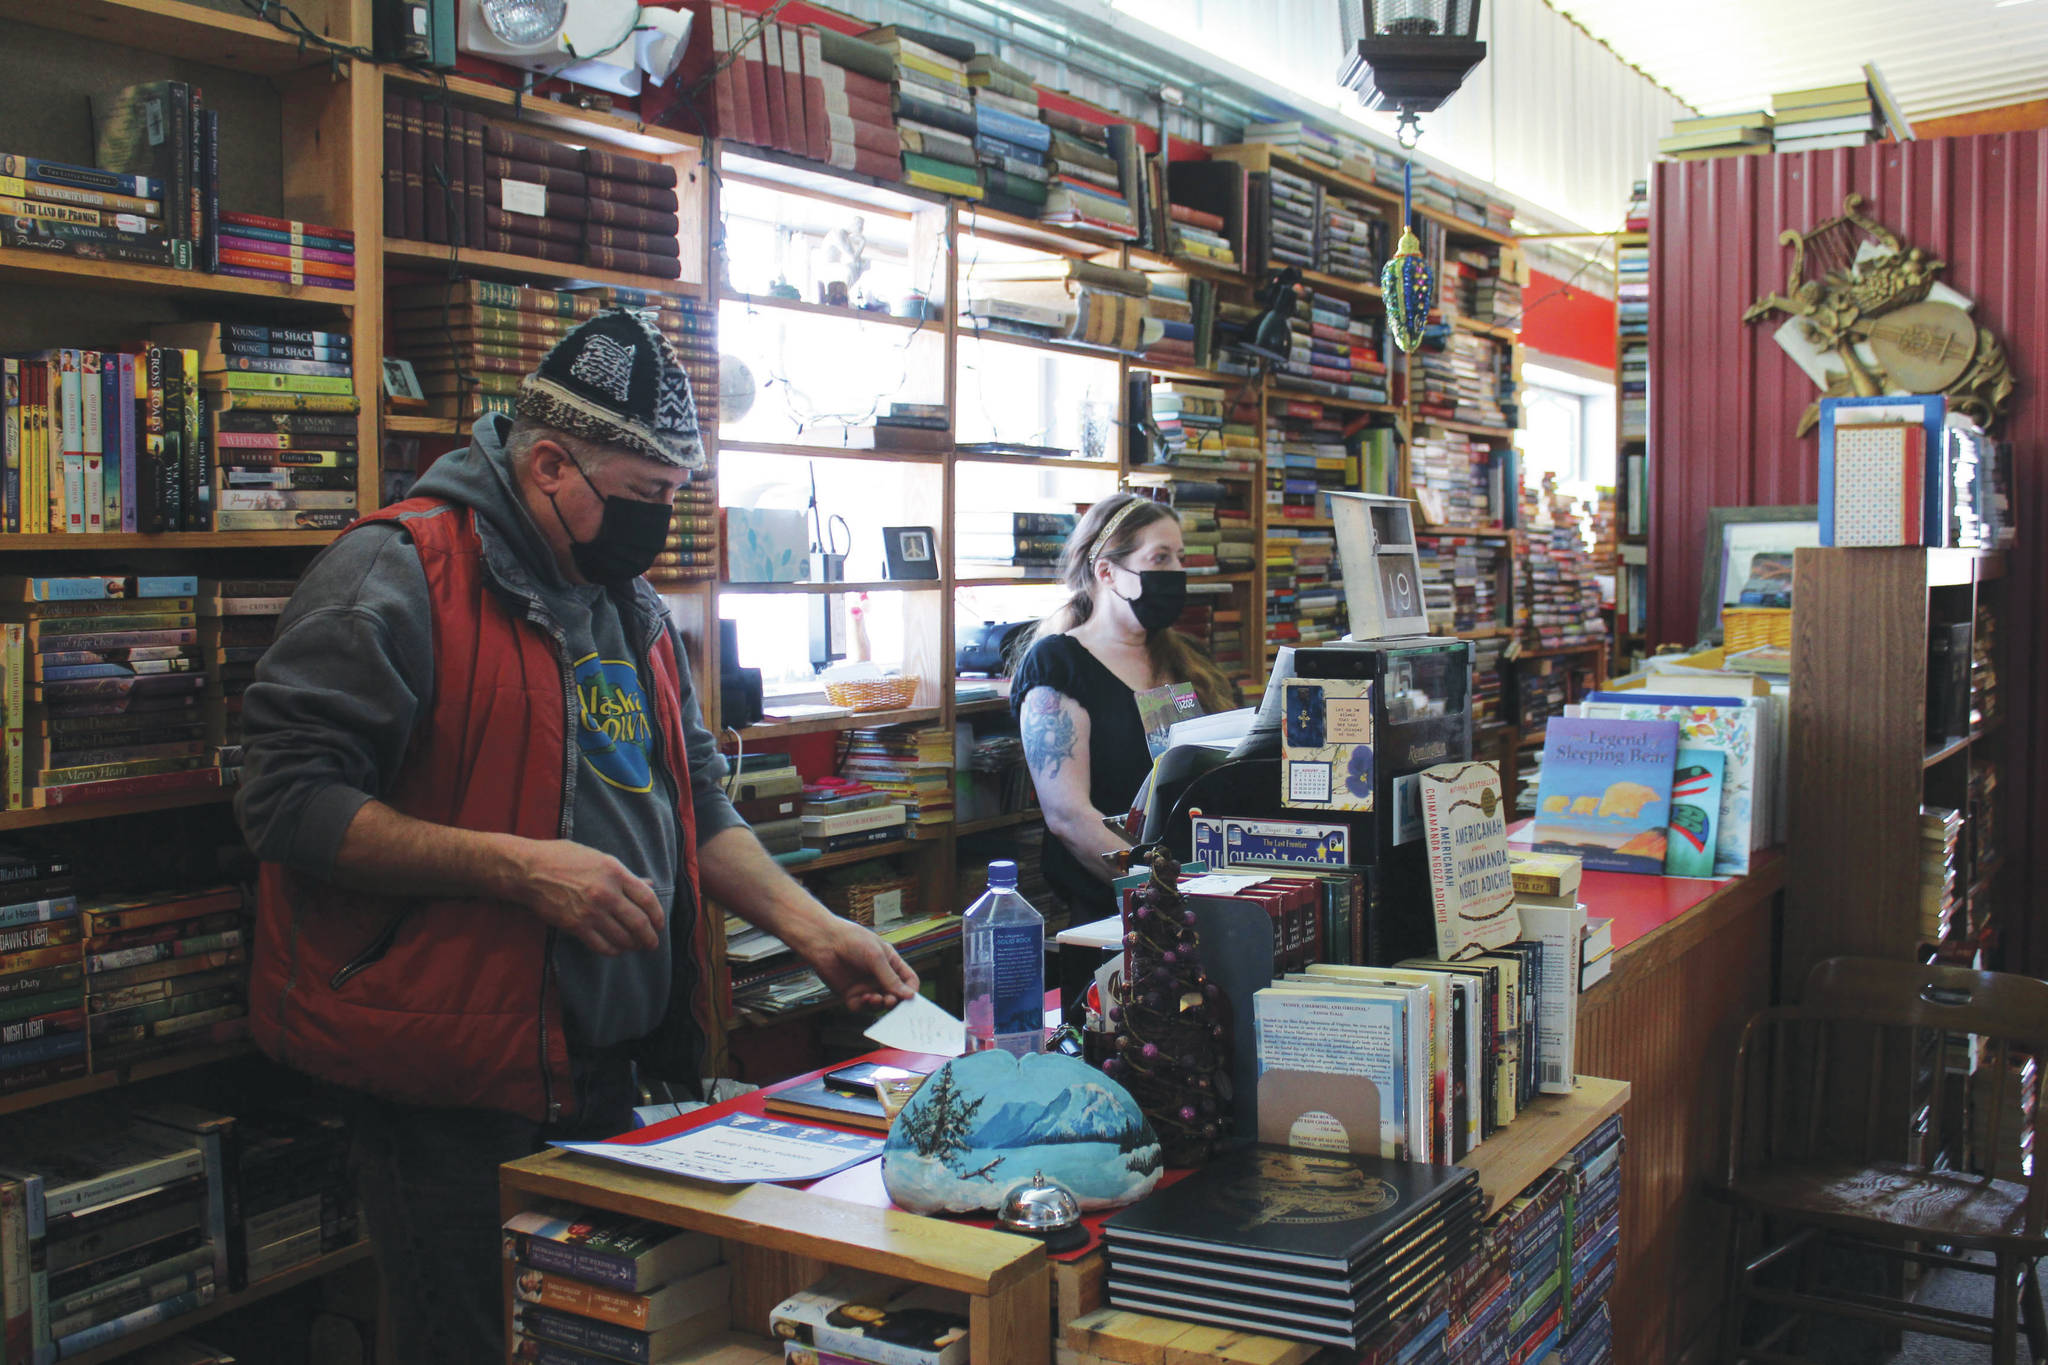 Benjamin Jackinsky (left) and Sarah O’Brien work at Already Read on Friday, Feb. 19 in Kenai, Alaska.